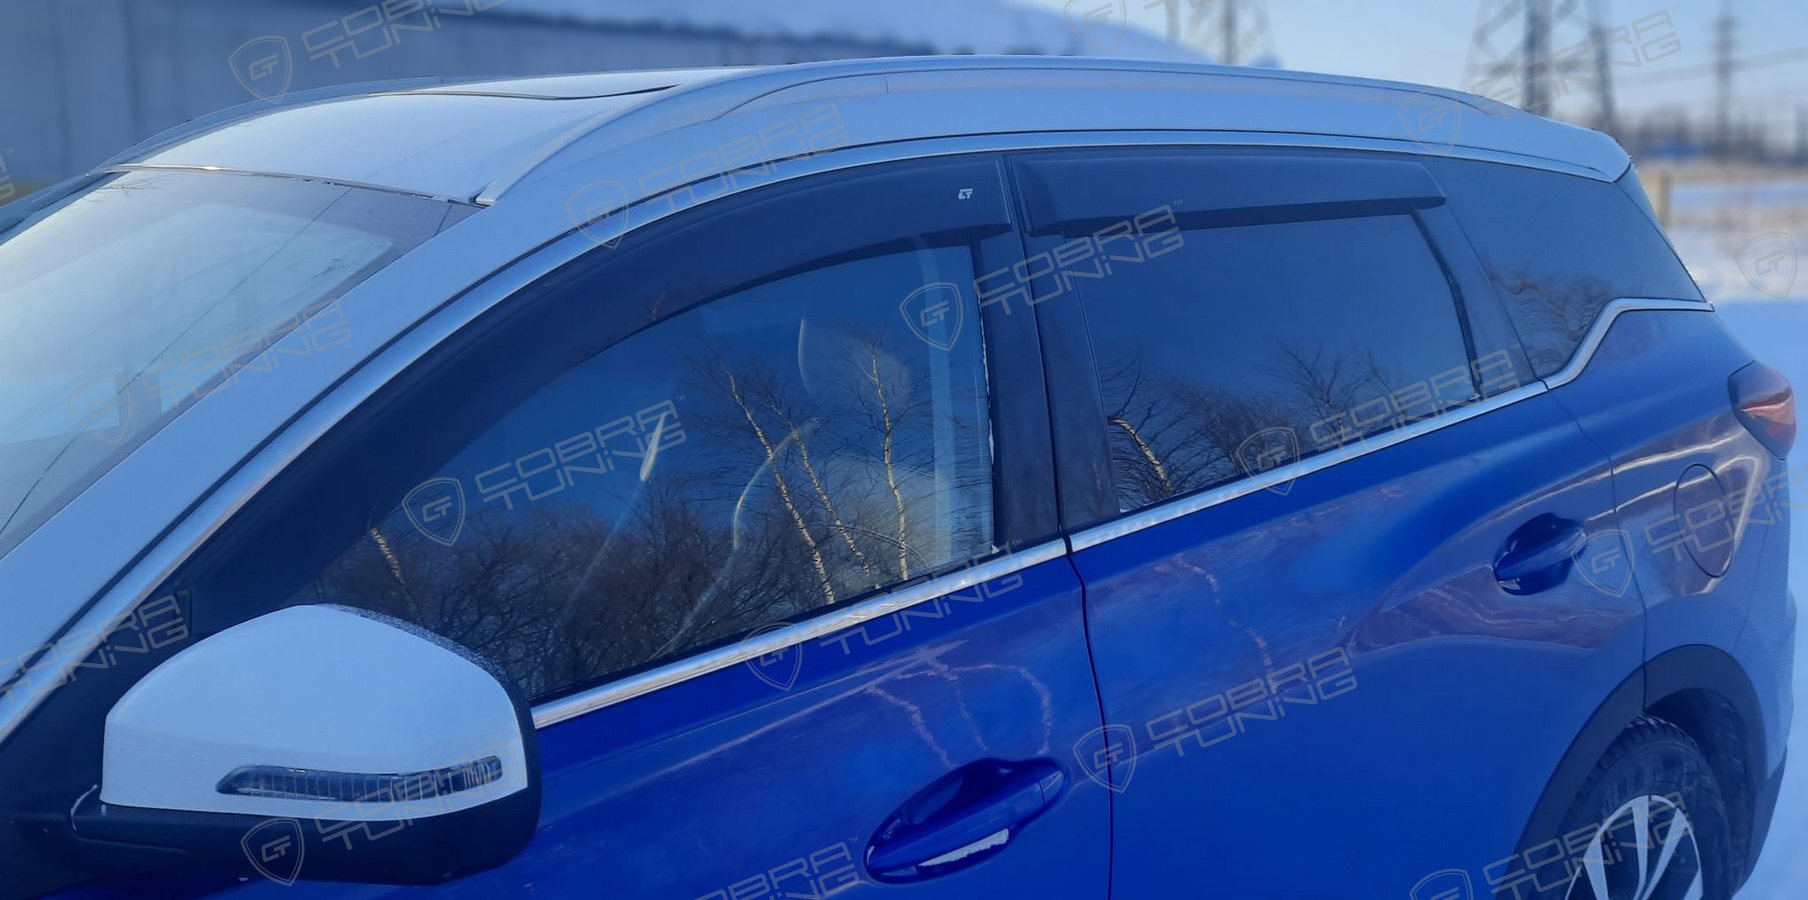 Отзыв - дефлекторы Кобра Тюнинг на окна Чери Тигго про 2020